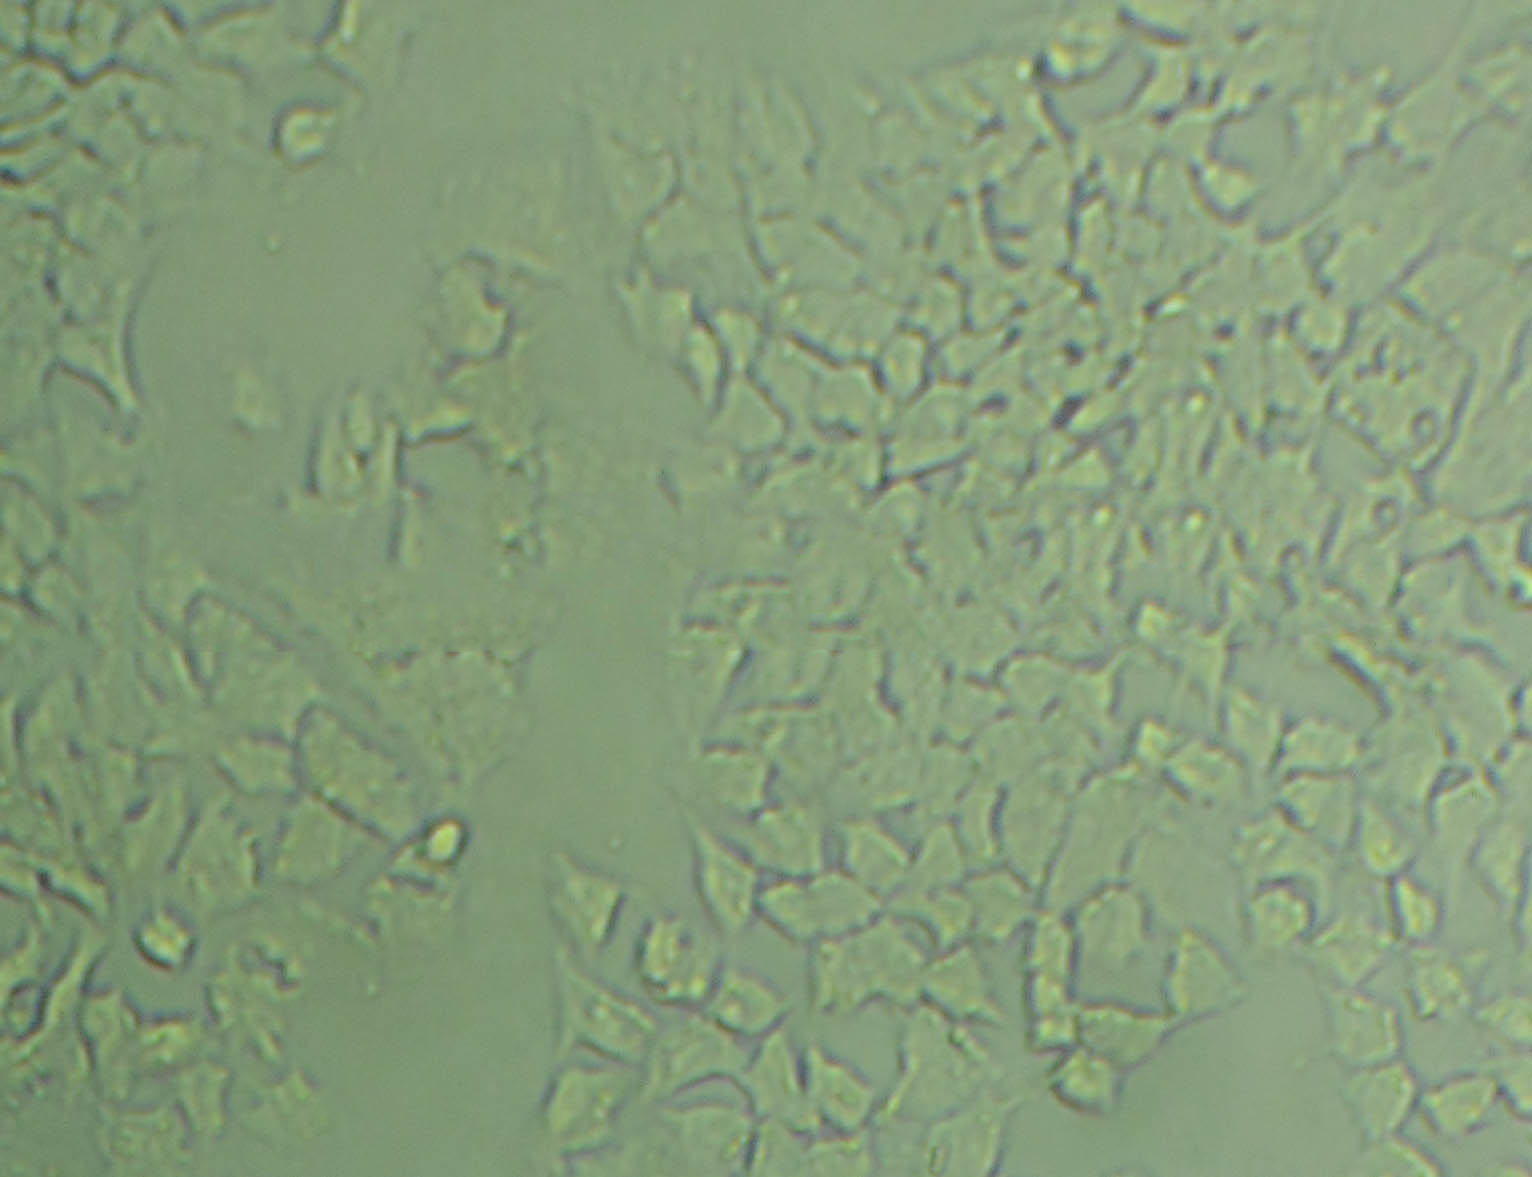 HSC-3 Cell|人口腔鳞癌细胞,HSC-3 Cell